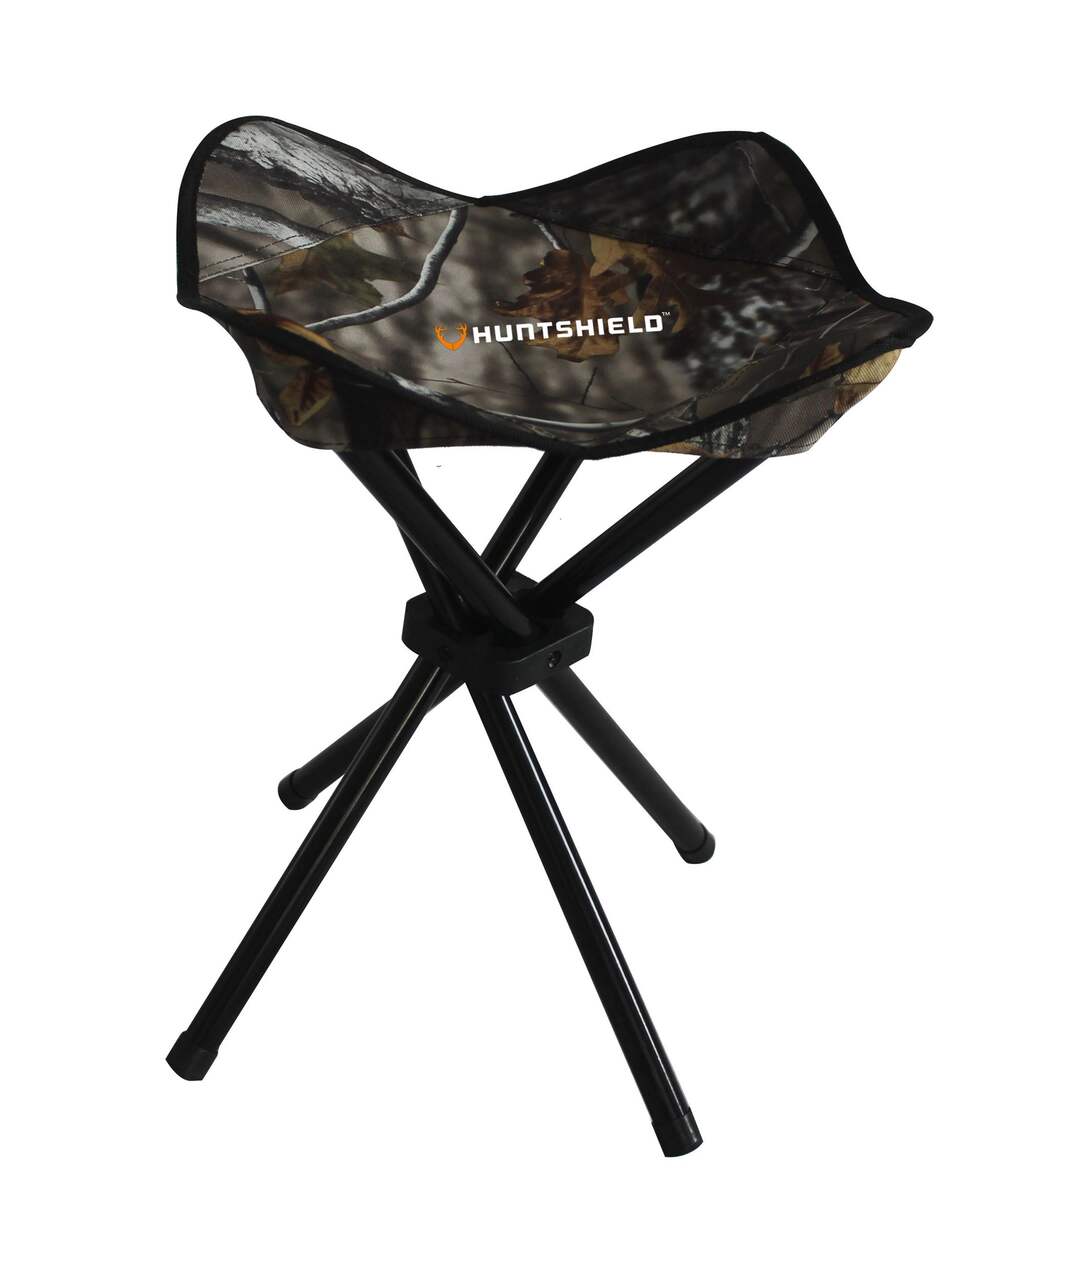 Huntshield Four Legged Fold-Up Stool/Chair